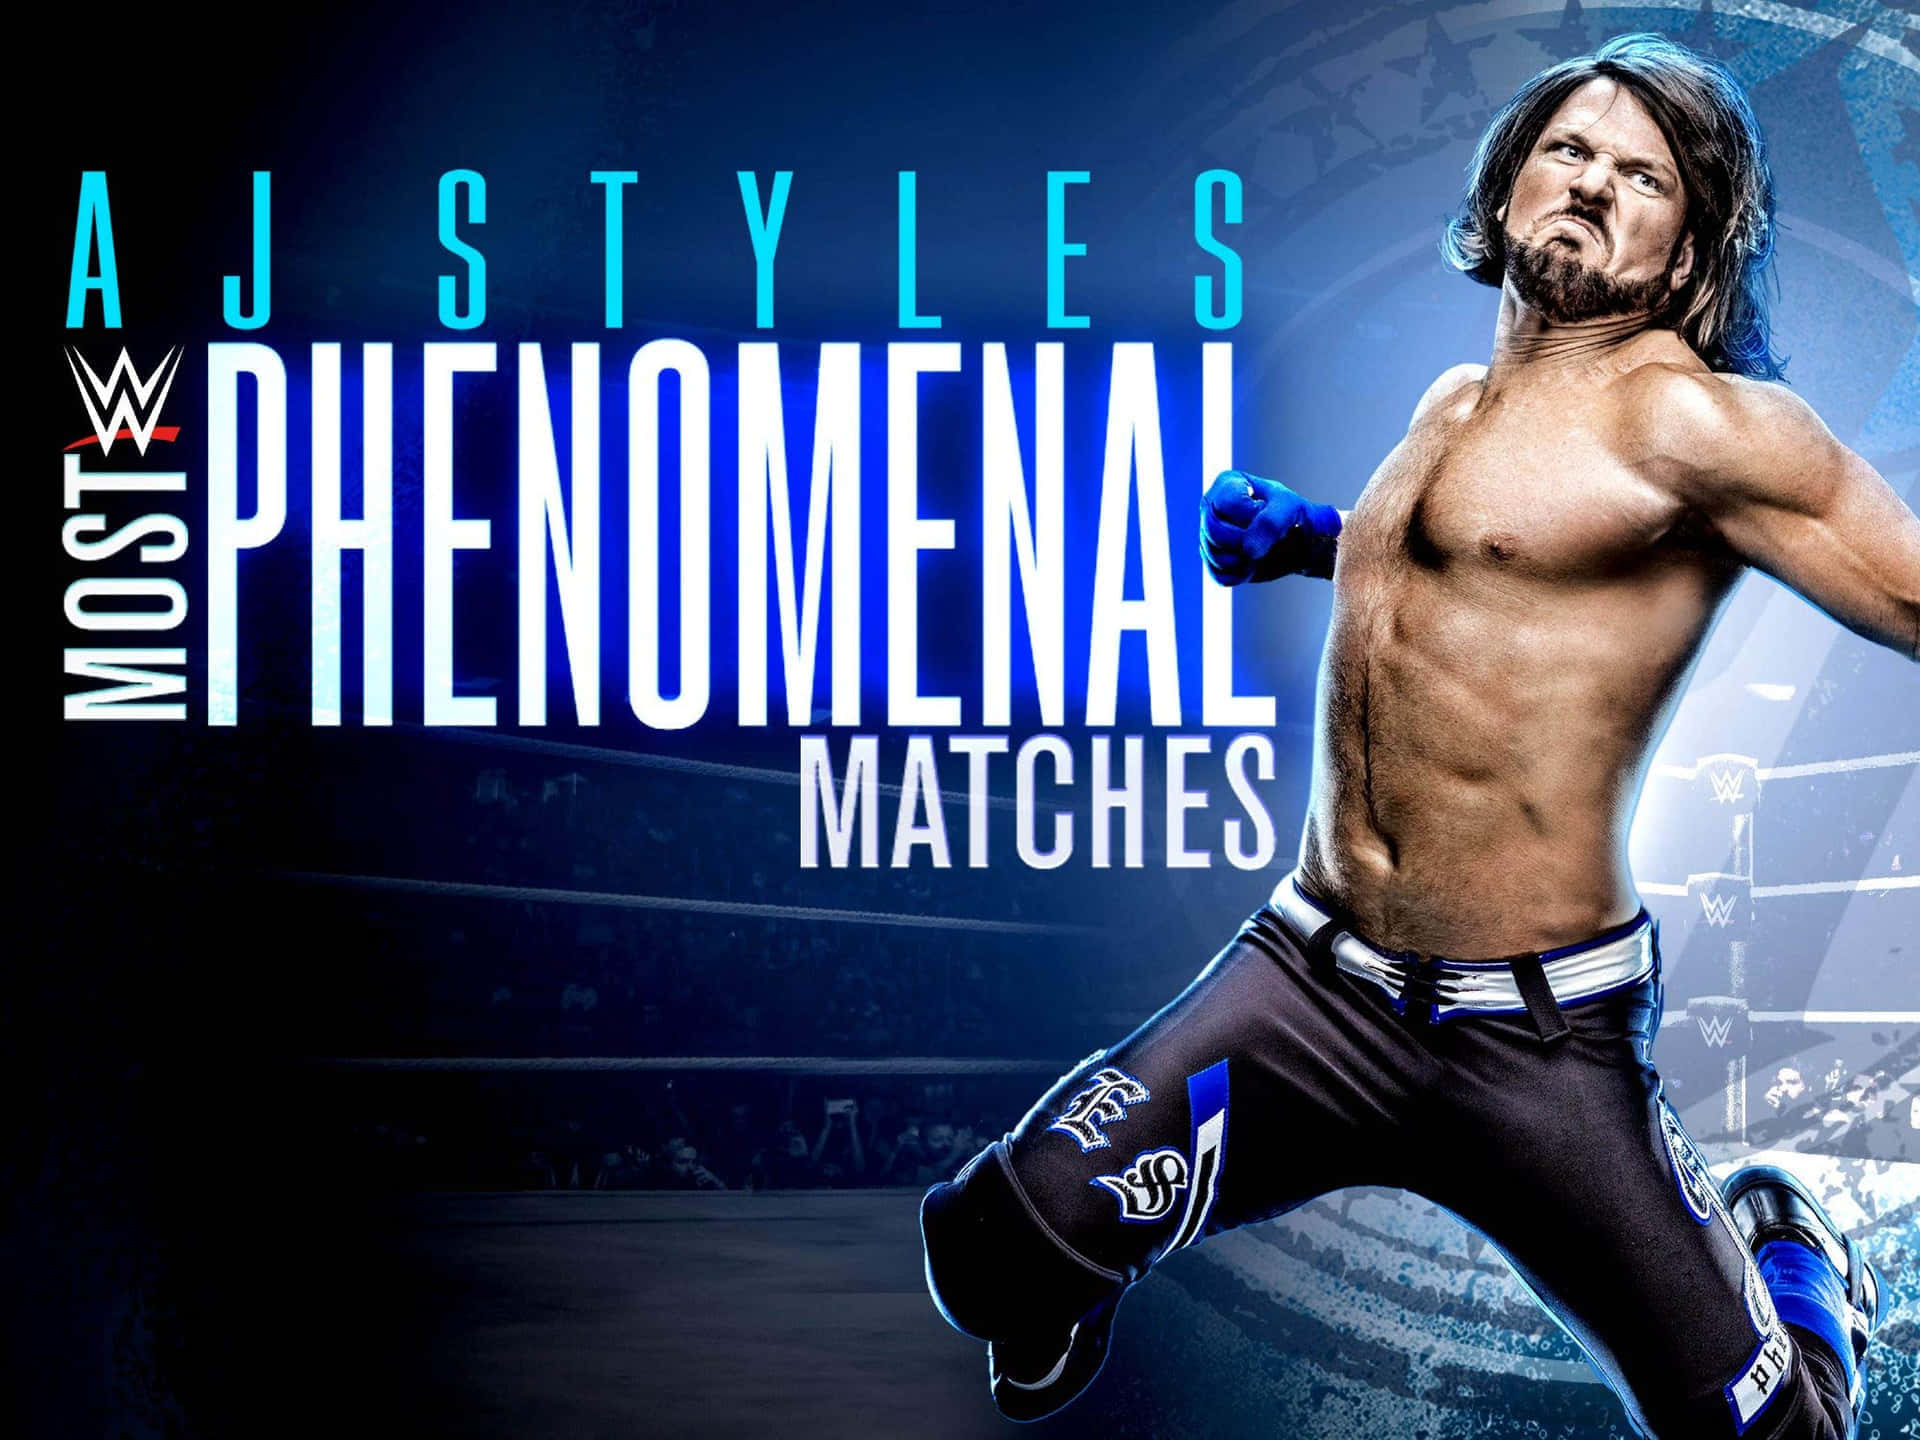 Download Phenomenal Matches Of AJ Styles Wallpaper